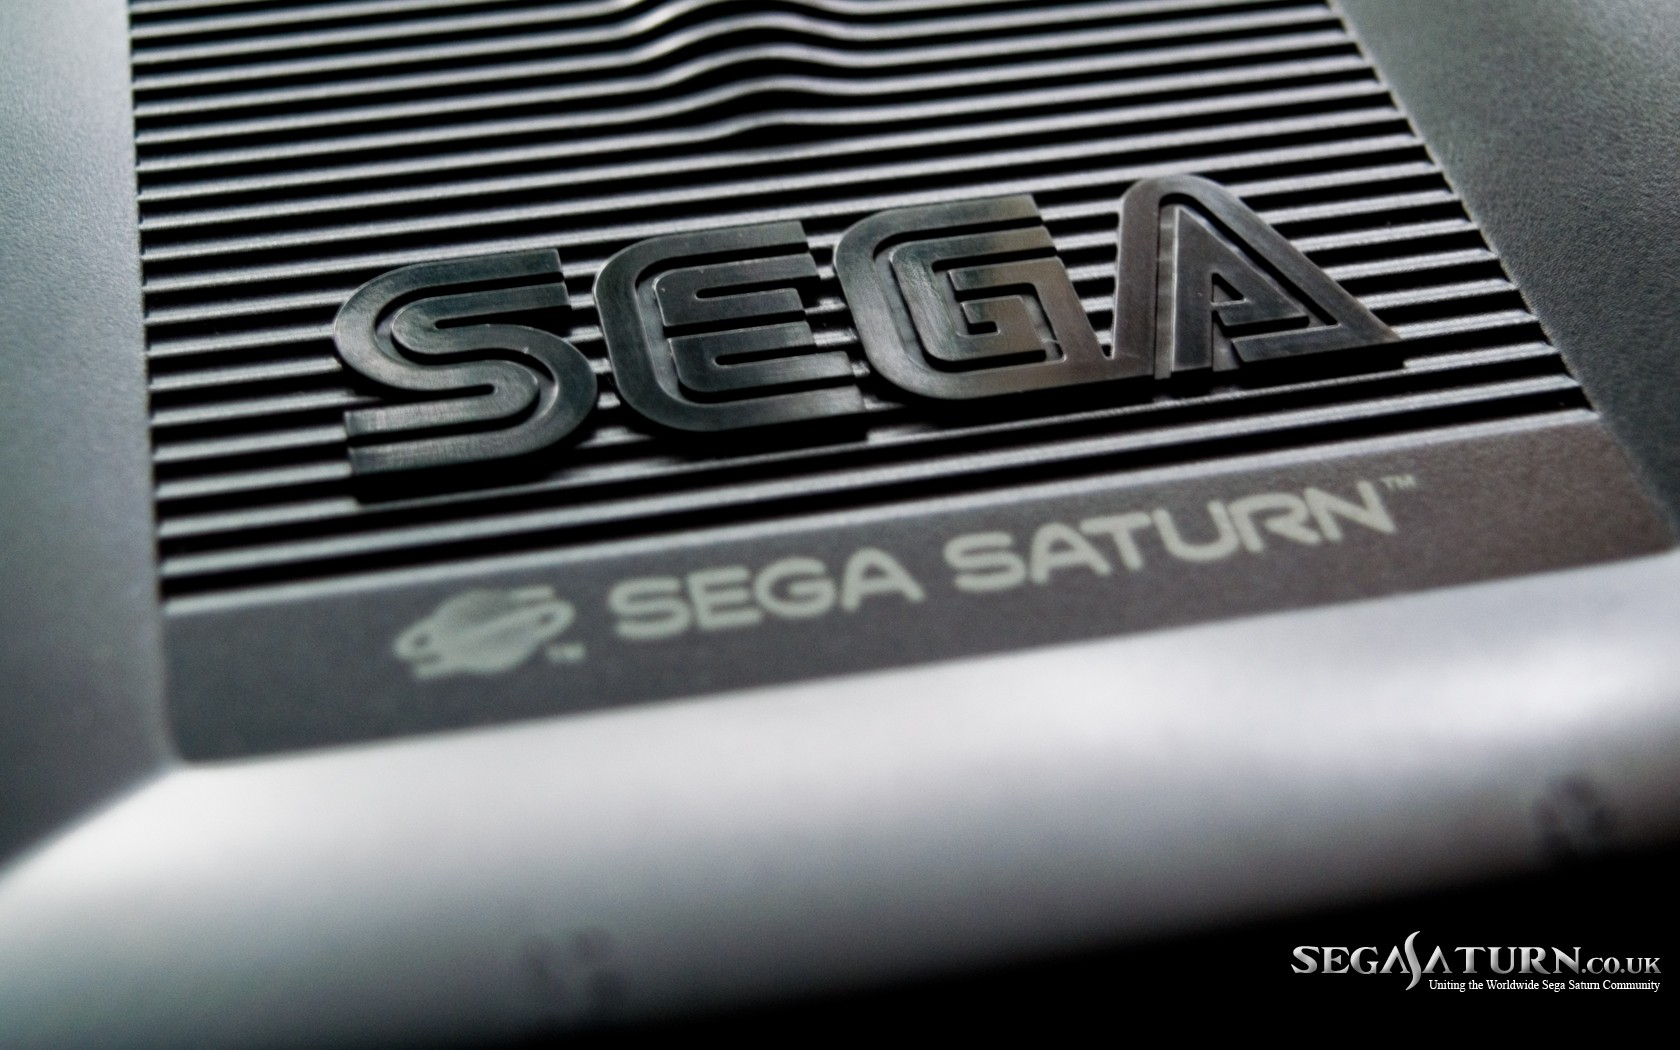 General 1680x1050 Sega sega saturn retro games video games nostalgia consoles technology logo